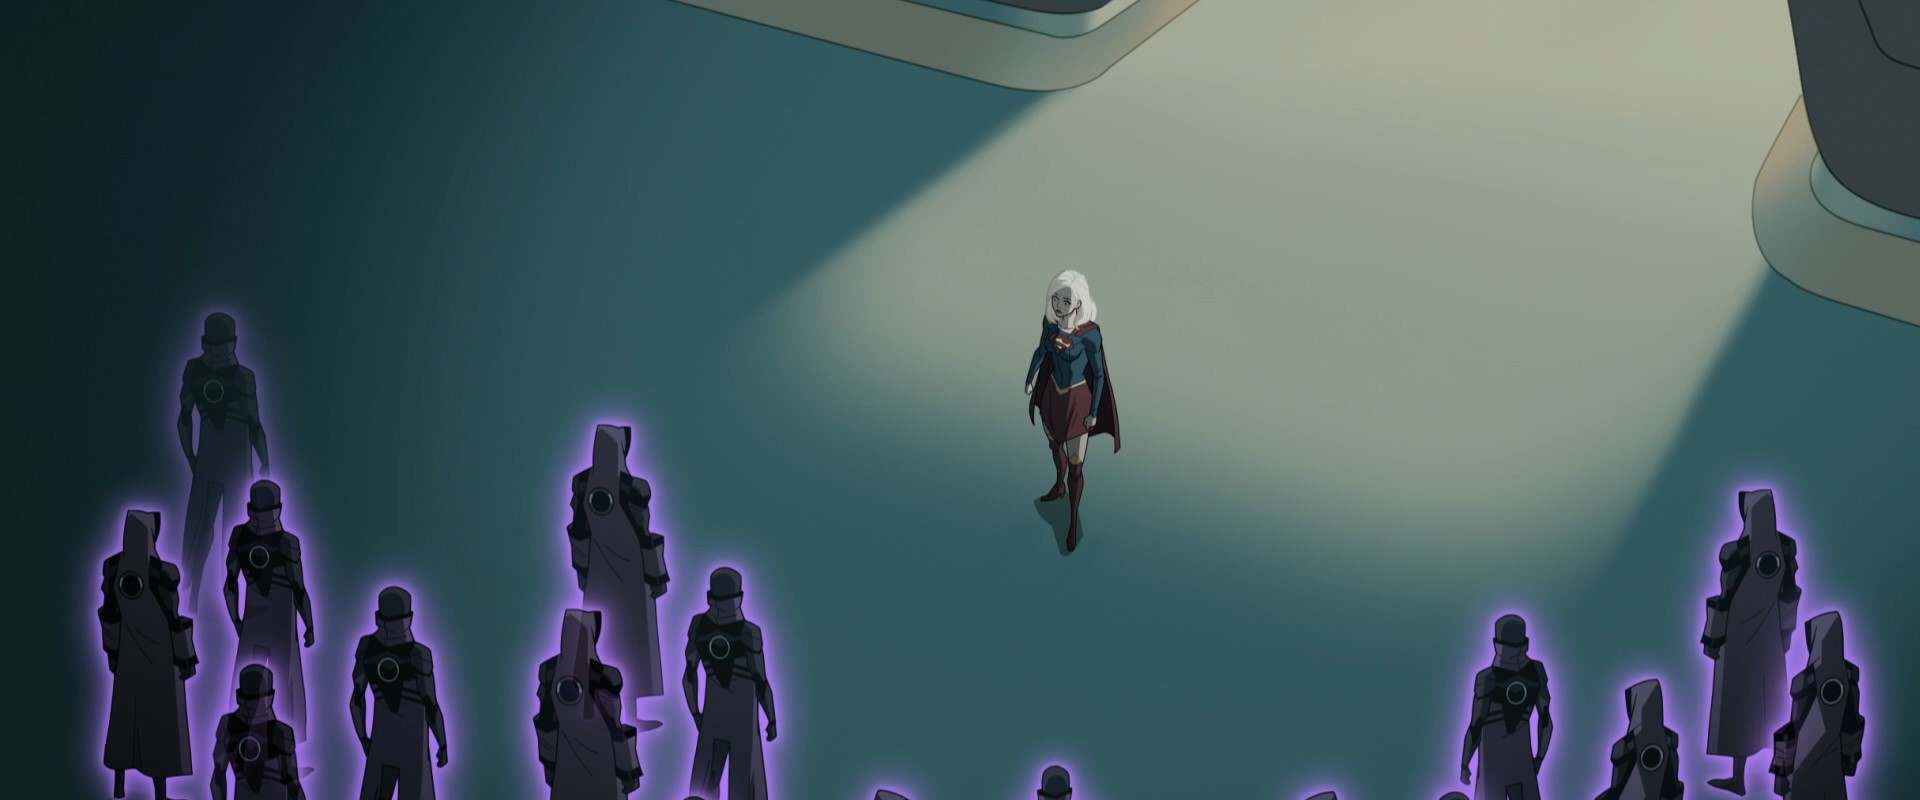 Legion of Super-Heroes background 2